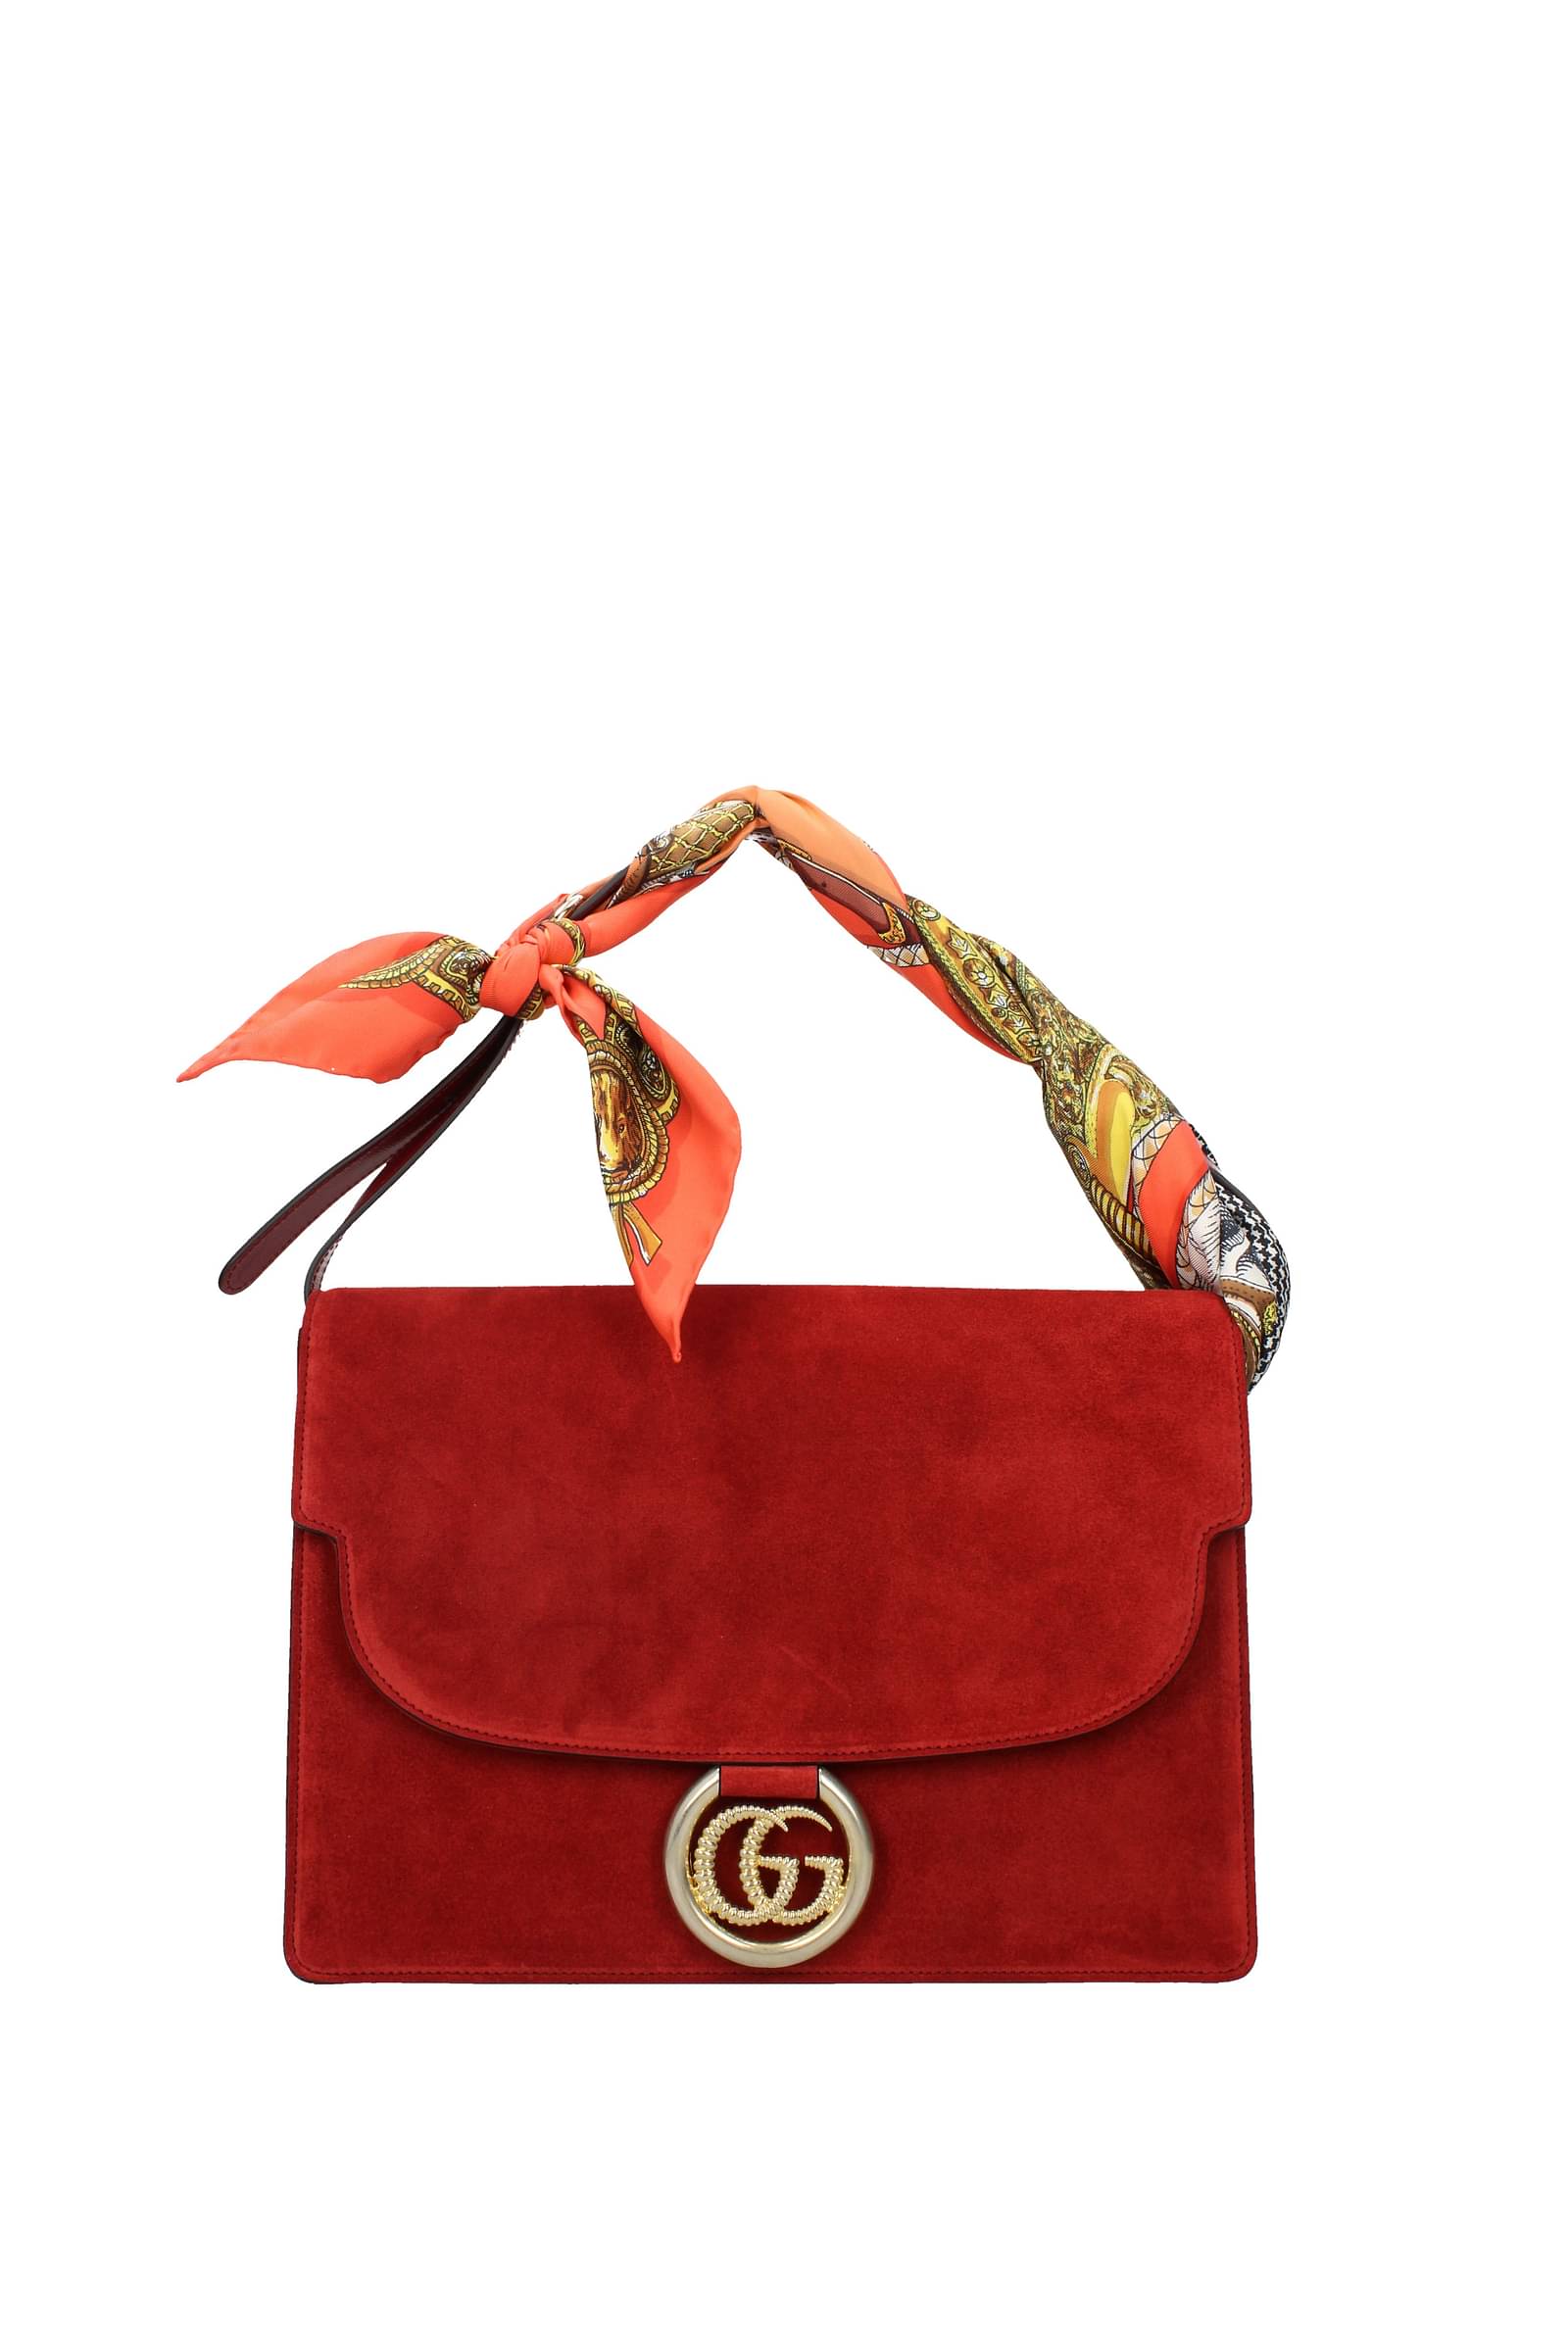 Gucci bags outlet online: best models 